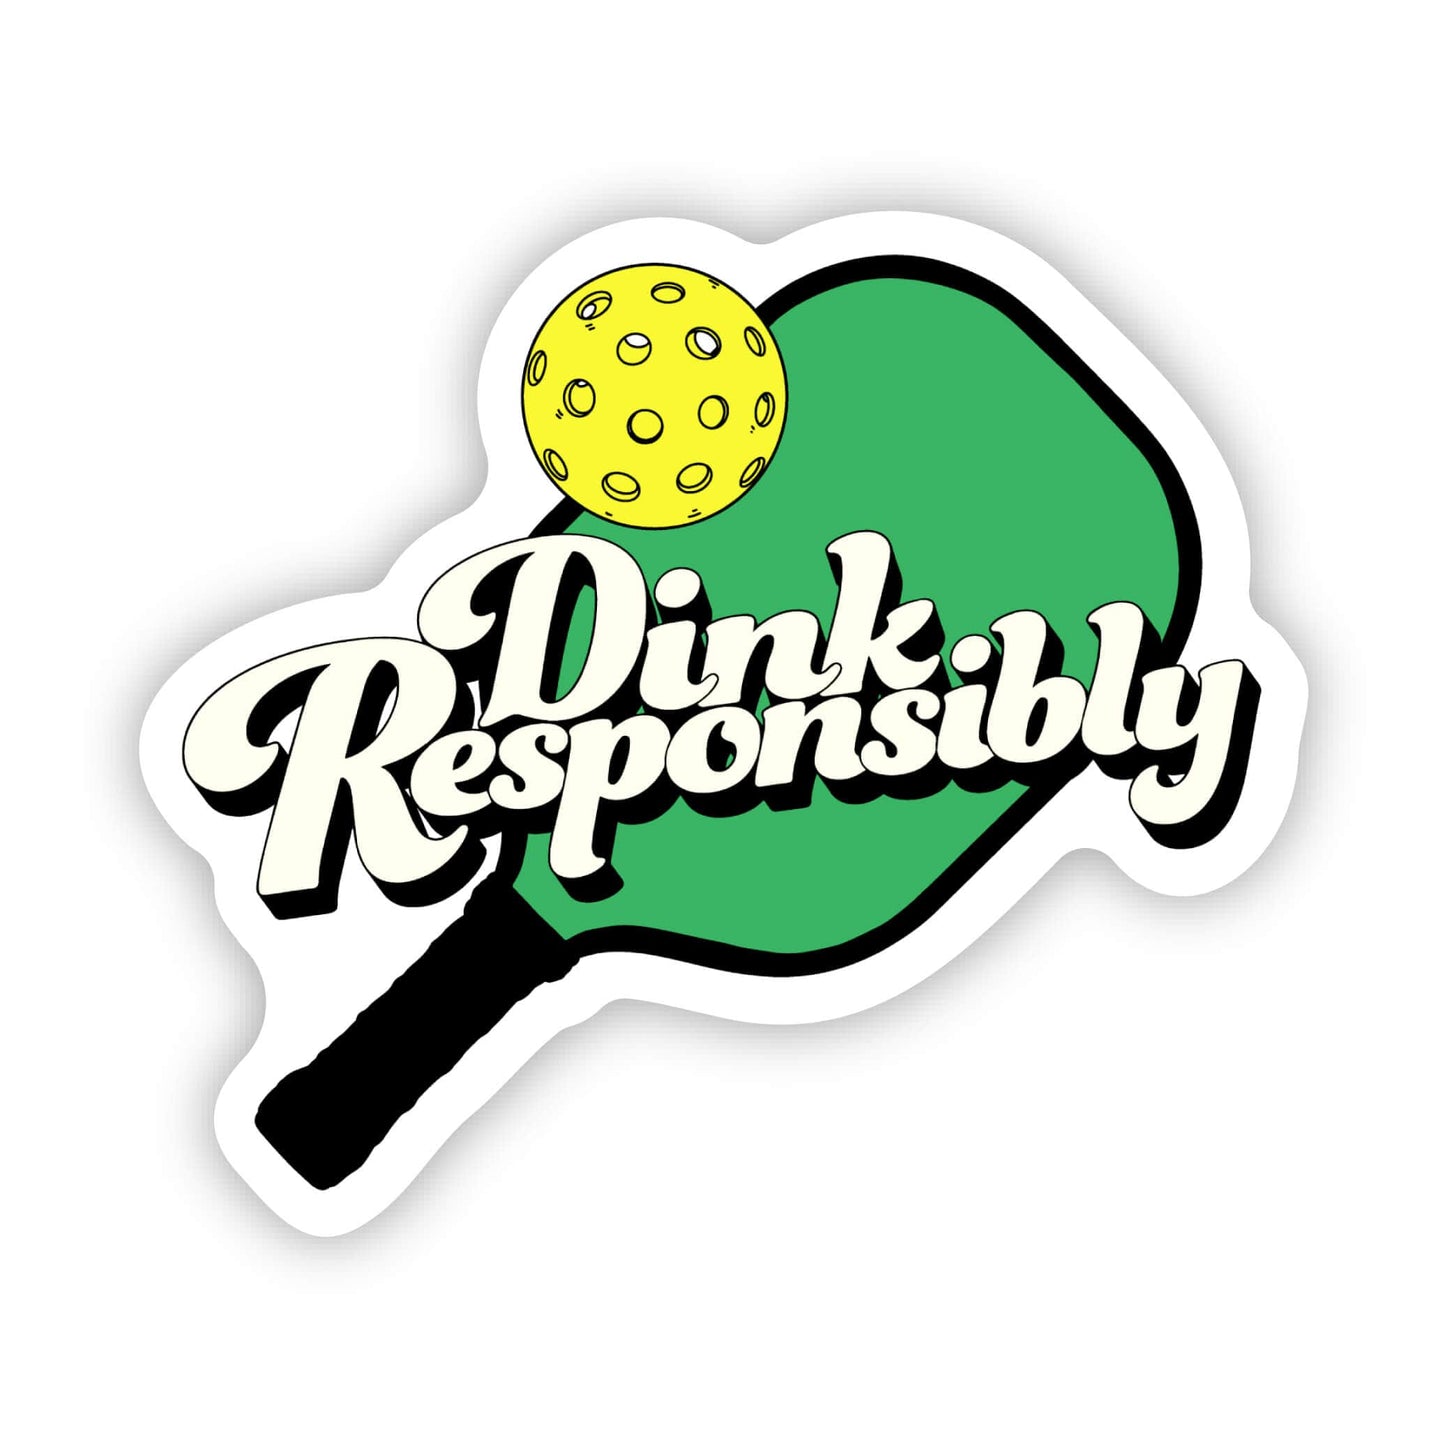 Pickleball Sticker